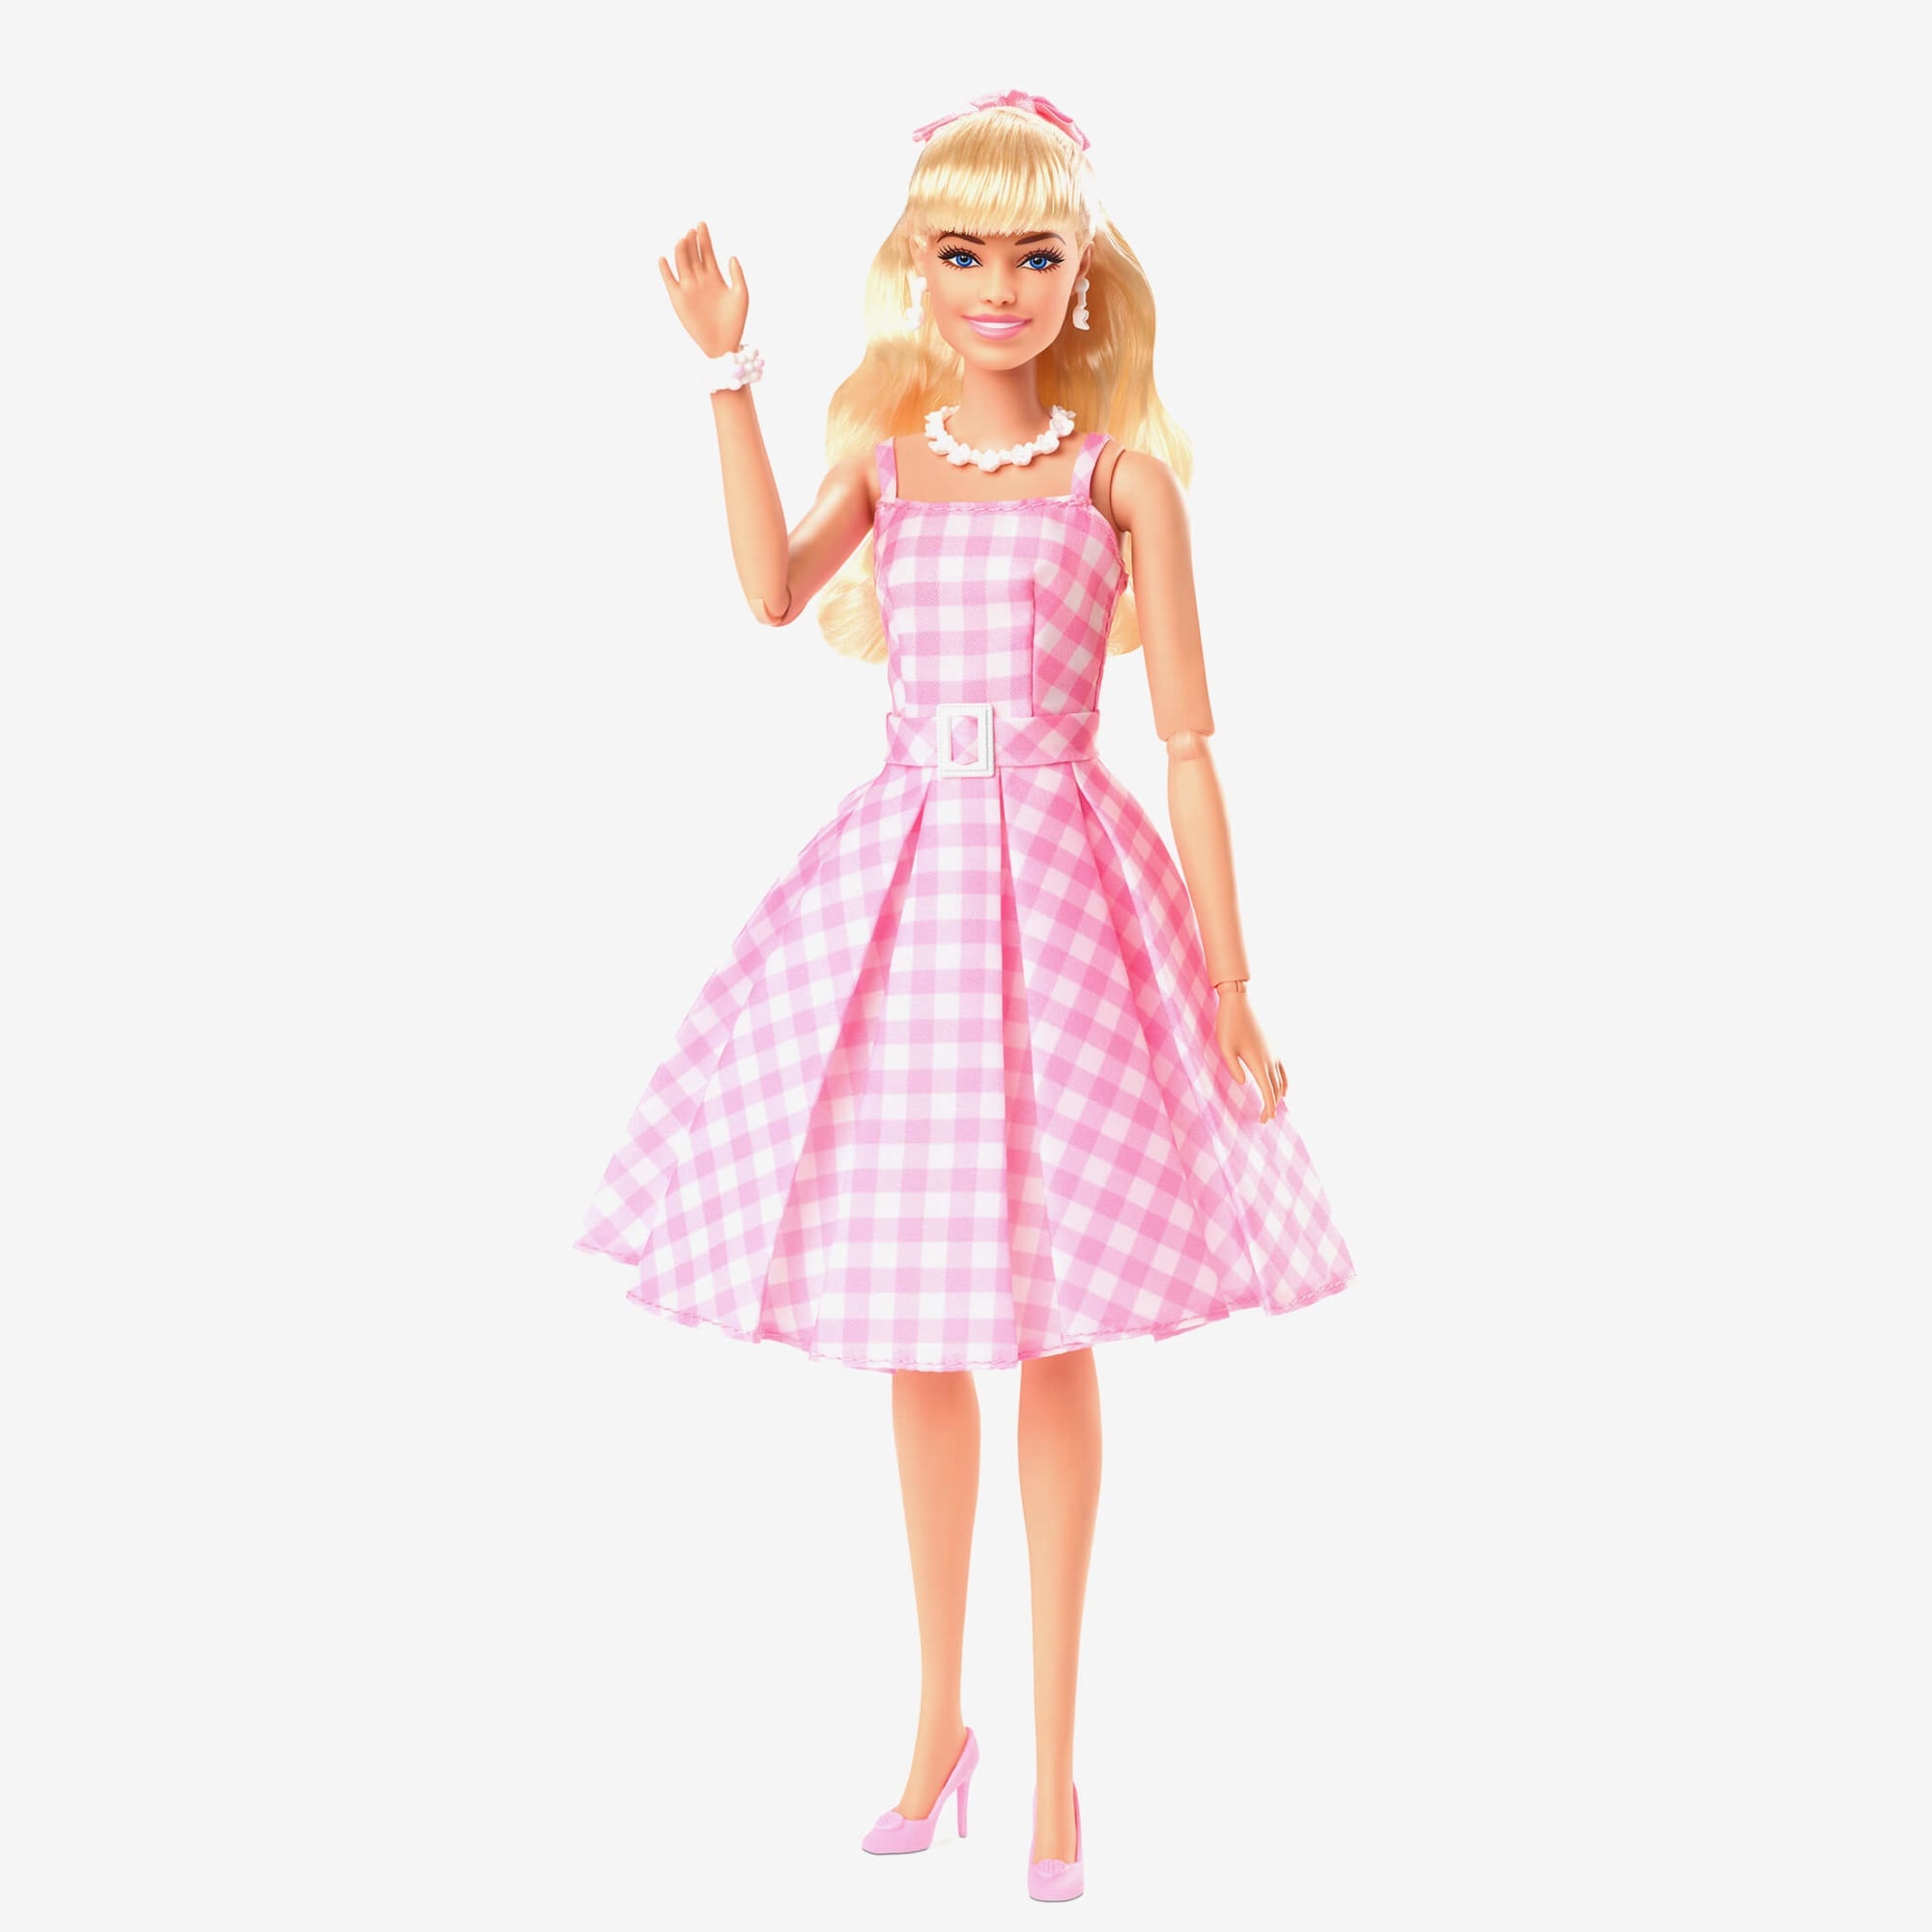 pink dress barbie